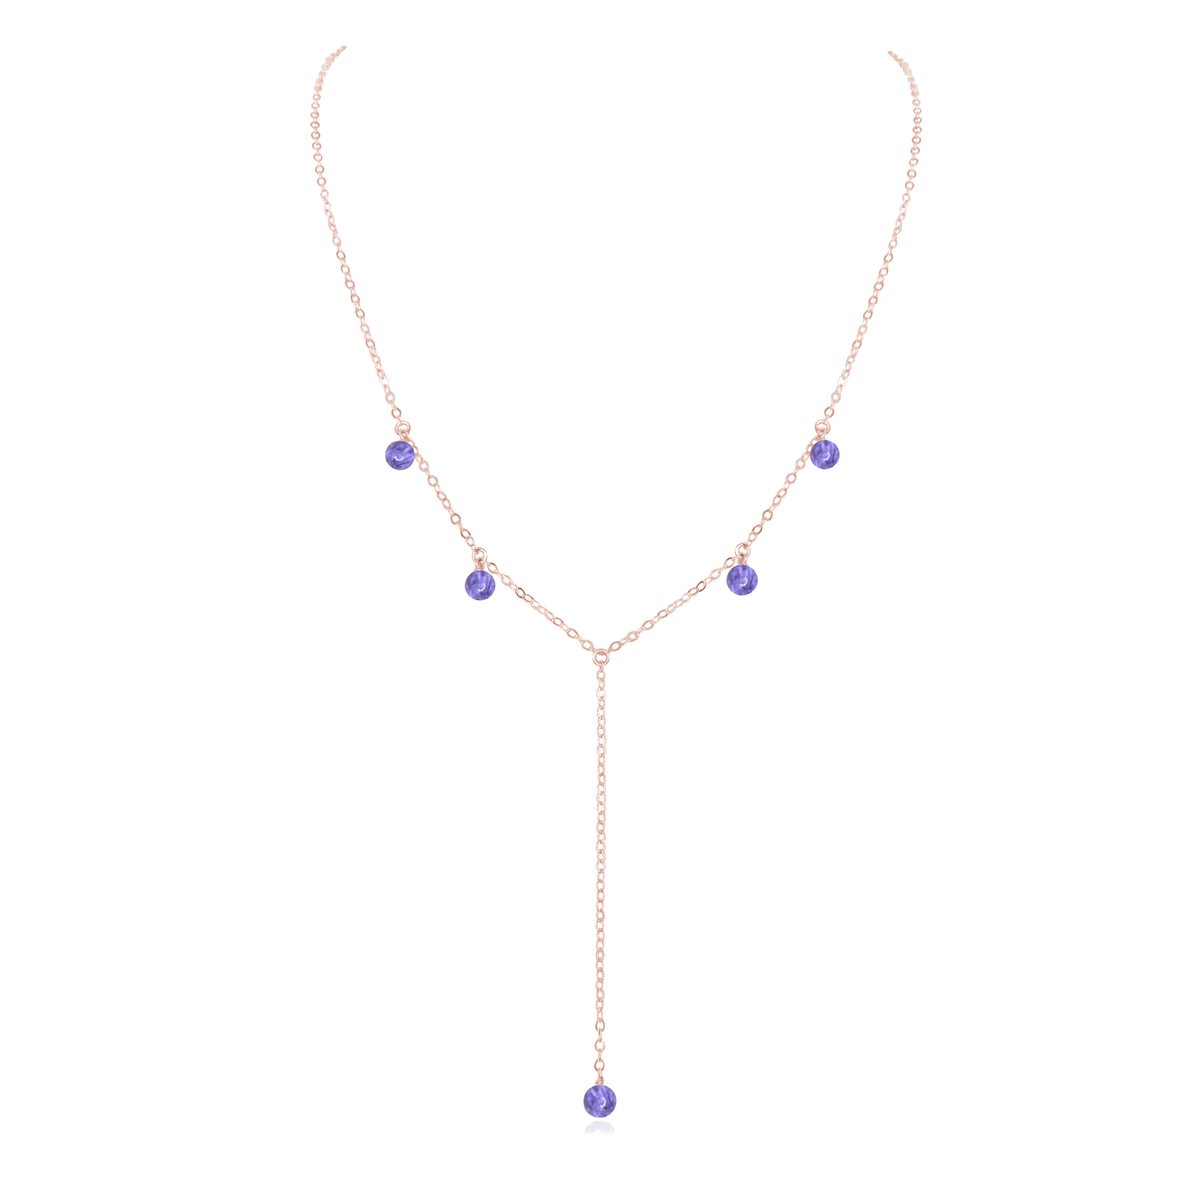 Tanzanite Boho Lariat Necklace - Tanzanite Boho Lariat Necklace - 14k Rose Gold Fill - Luna Tide Handmade Crystal Jewellery